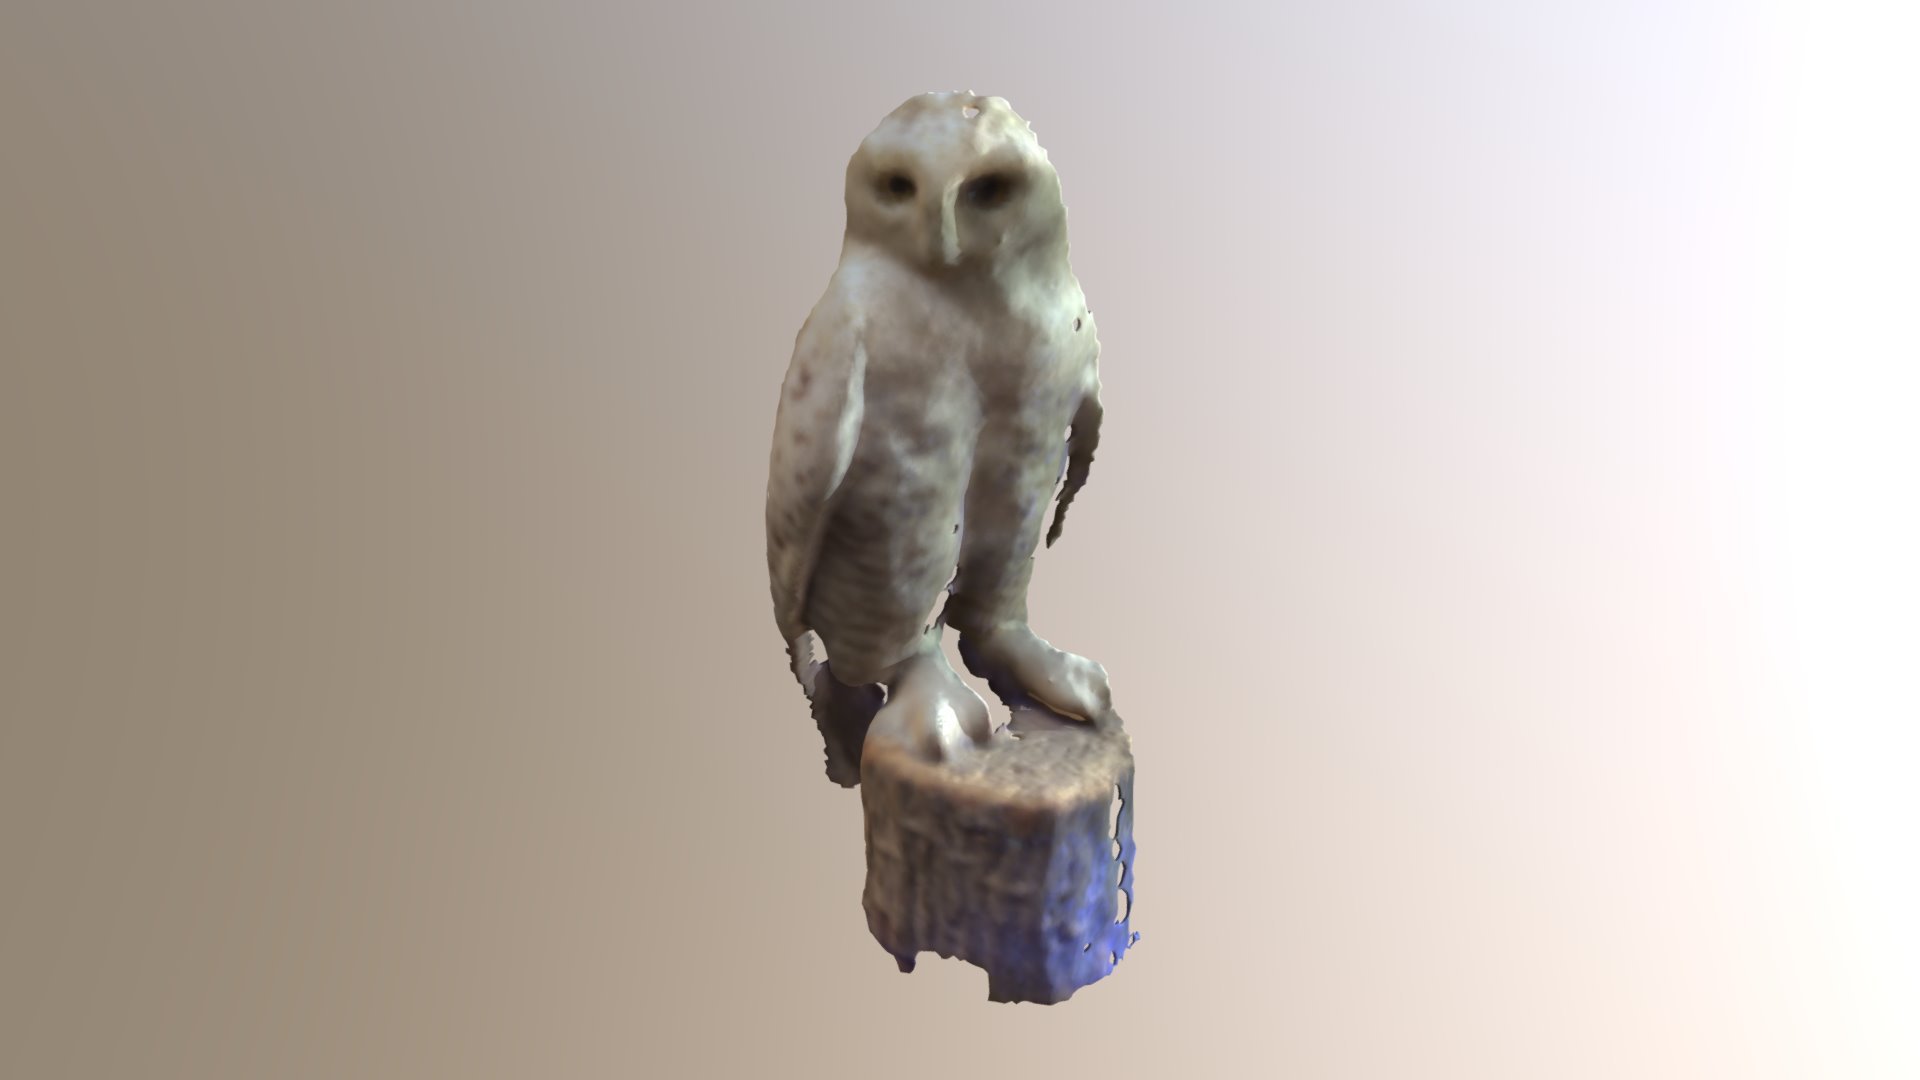 3. "Winter Wonderland Nail Art: Snowy Owl" - wide 6